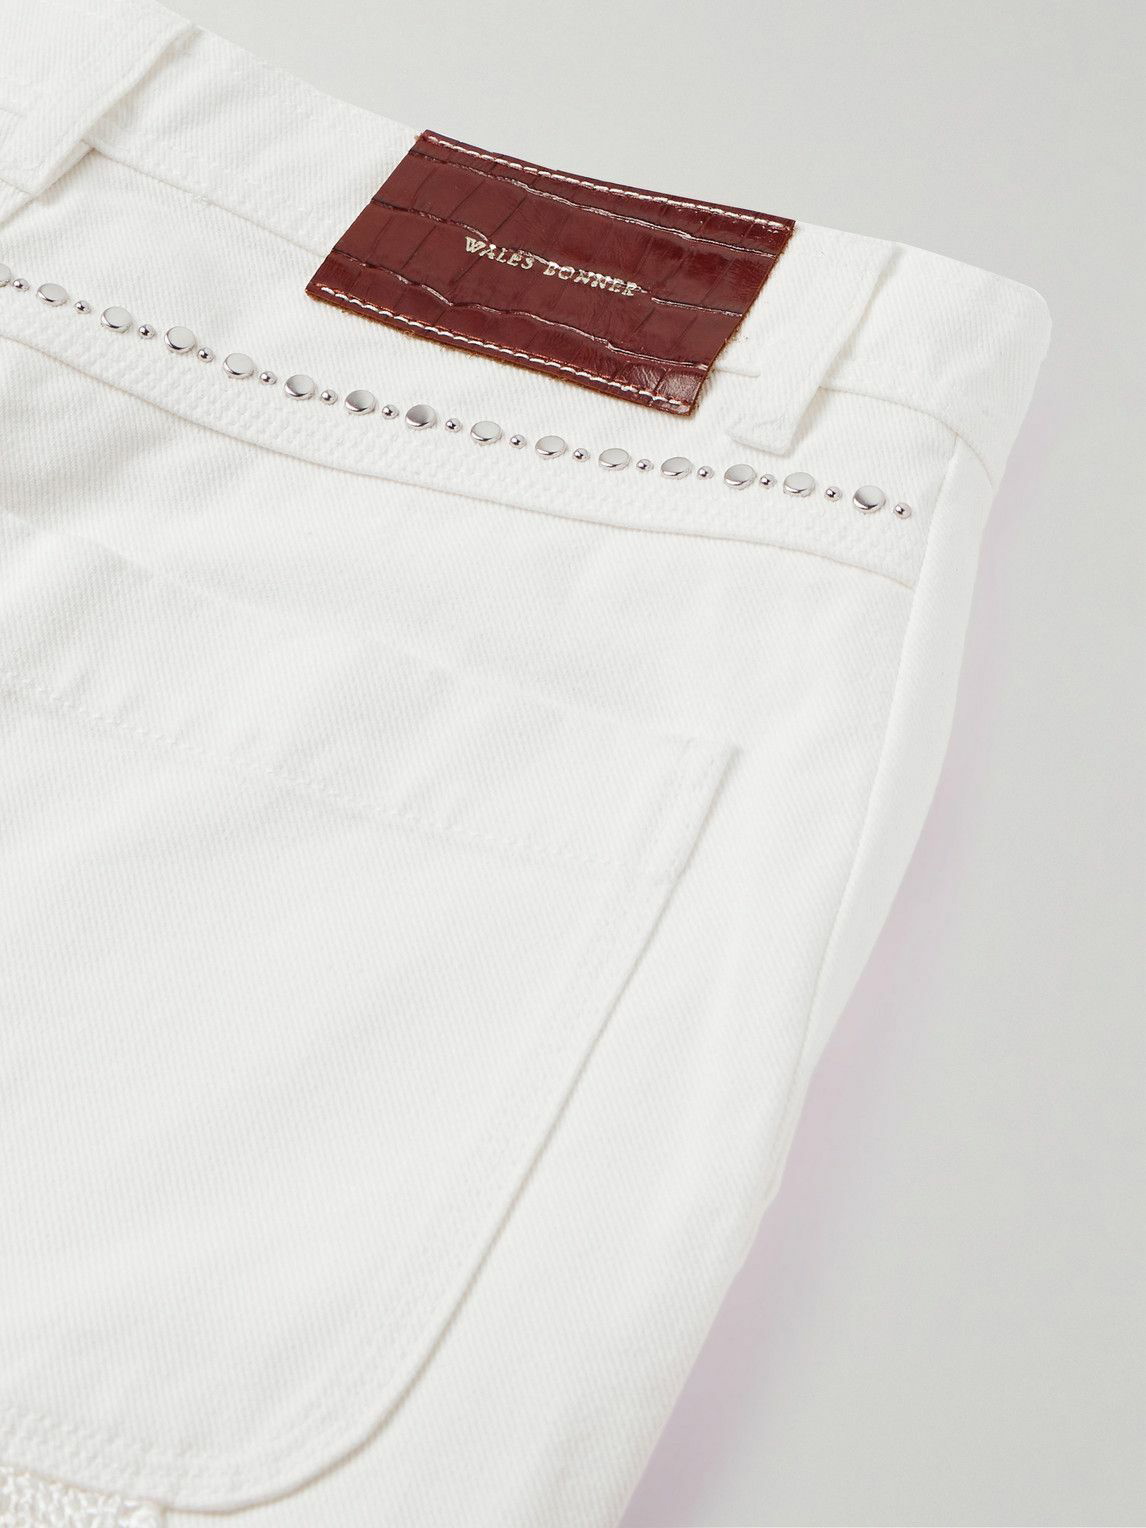 Wales Bonner - Kwame Straight-Leg Studded Organic Denim Jeans - White ...